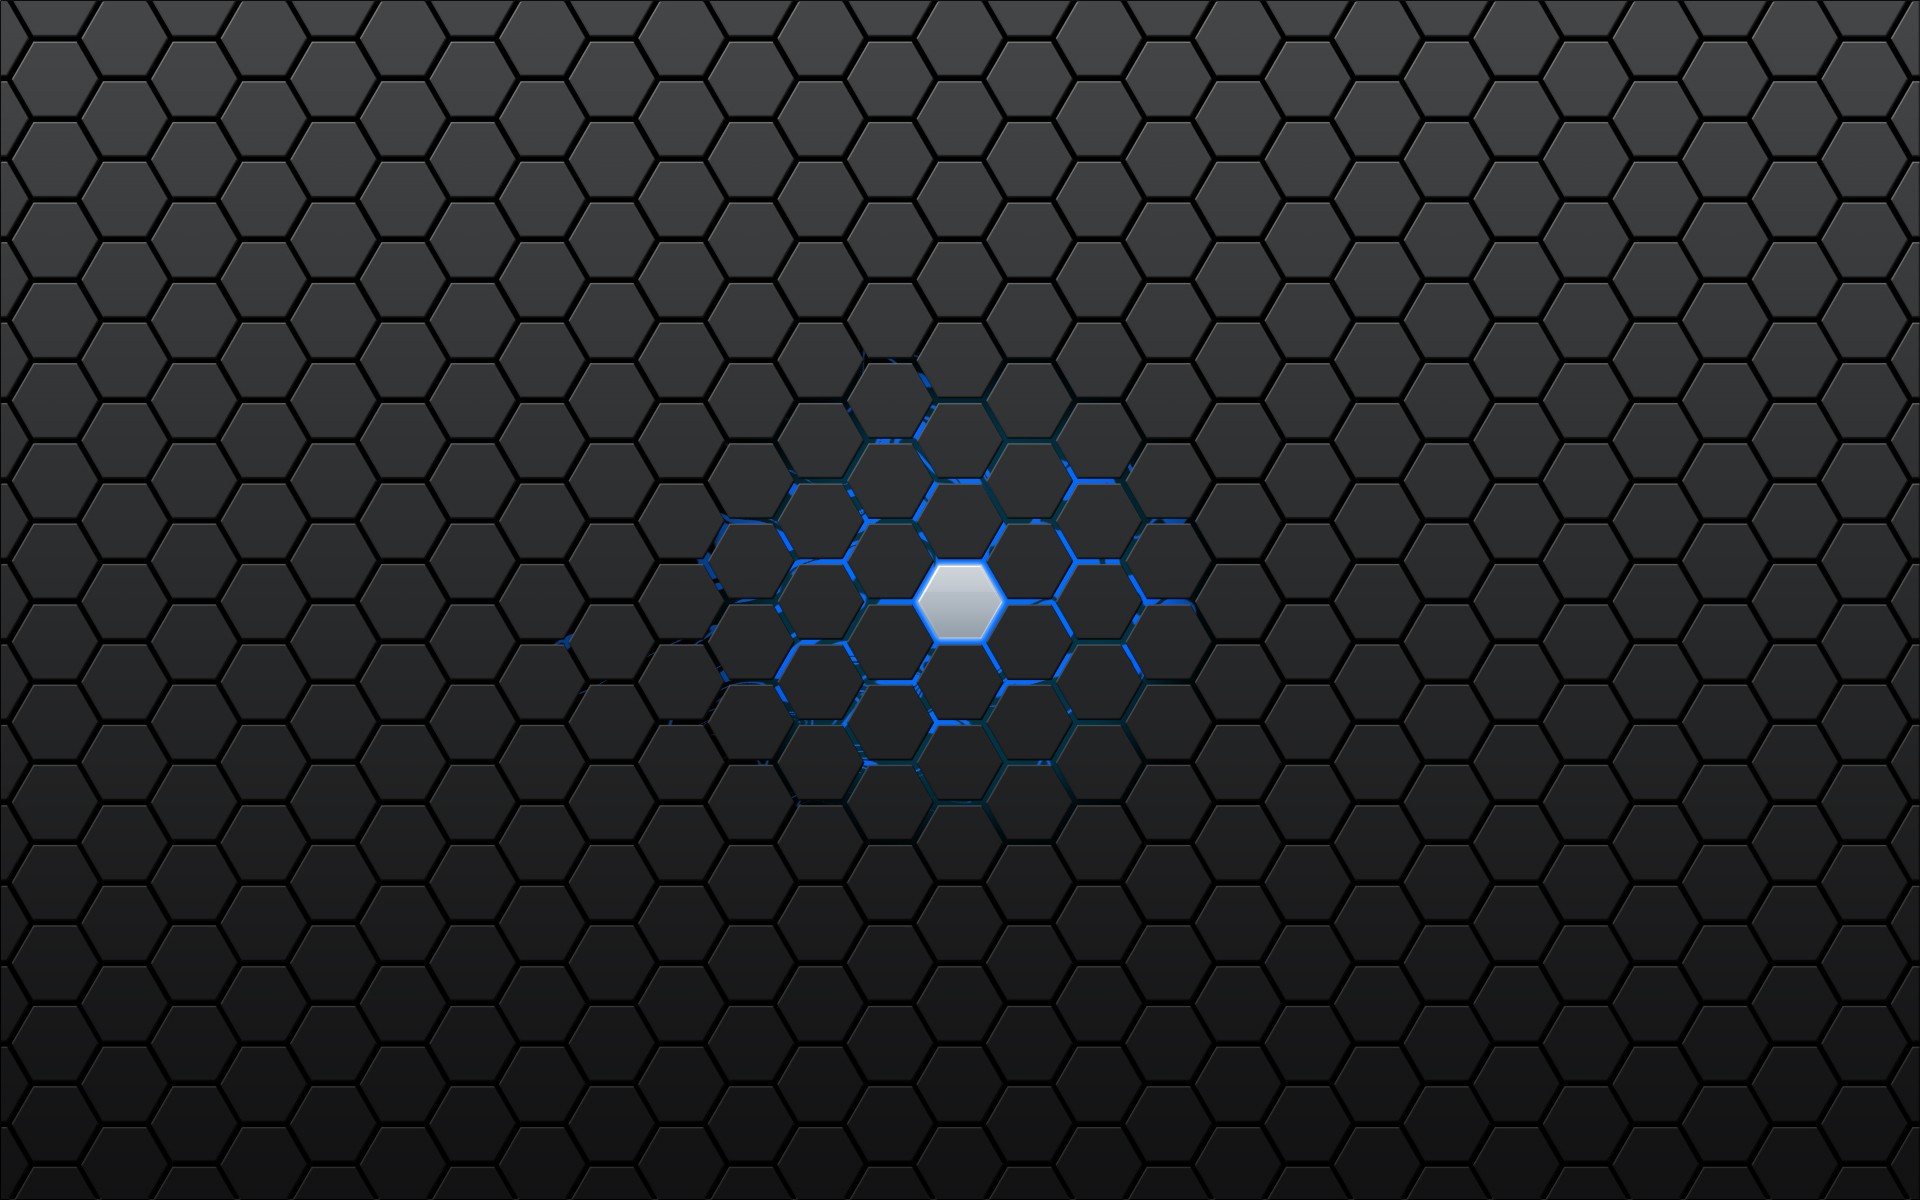 Cell, hexagons, textures, honeycomb, simple background - desktop wallpaper